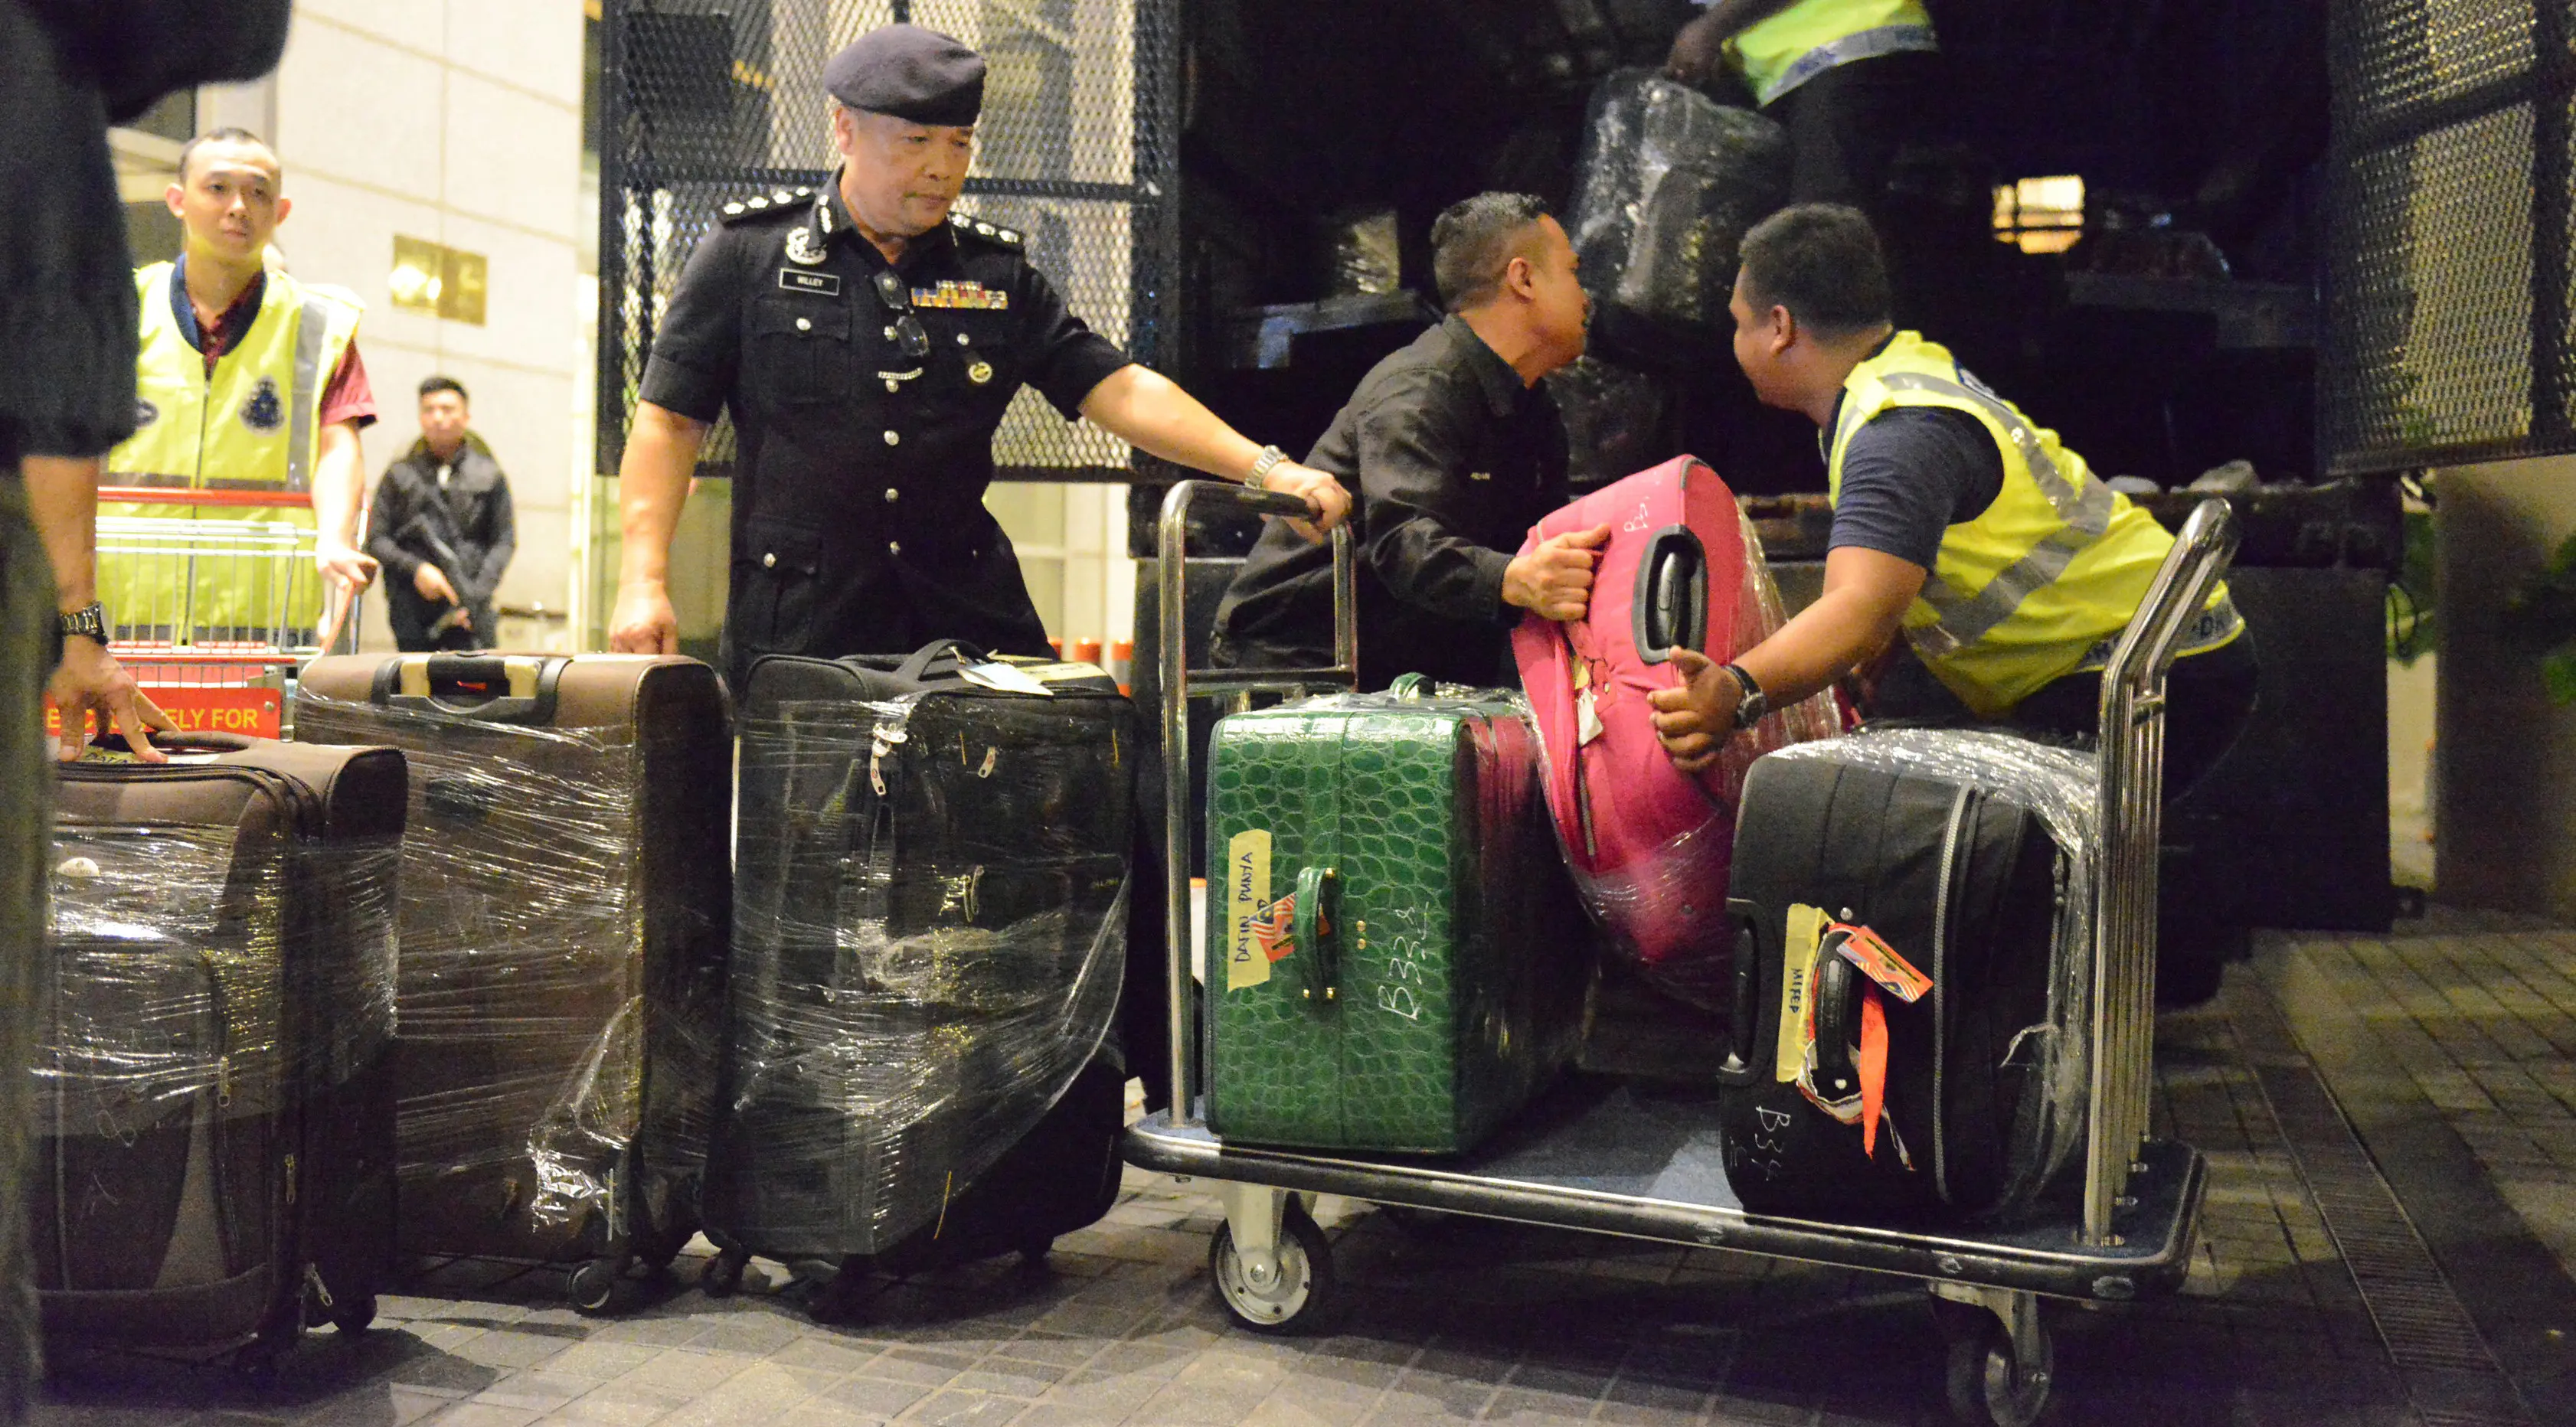 Polisi Malaysia memasukkan sejumlah koper berisi barang-barang yang disita dari tiga apartemen mantan Perdana Menteri Najib Razak di Kuala Lumpur, Jumat (18/5). Selain tas mewah, polisi juga menyita 72 tas bagasi berisi uang tunai dan perhiasan (AP Photo)